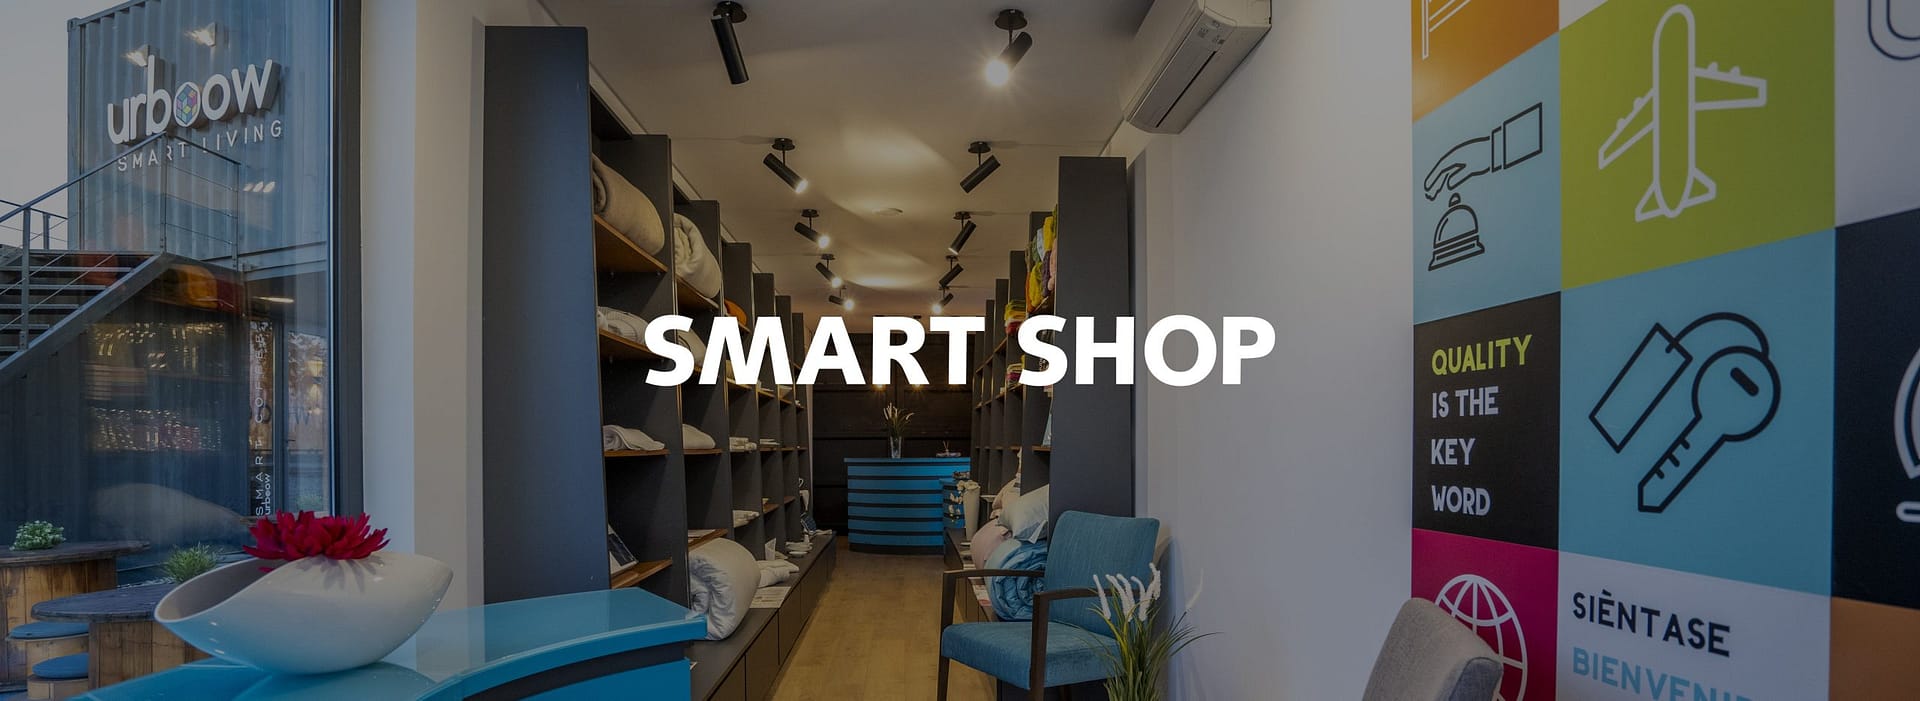 Smart Shop-min